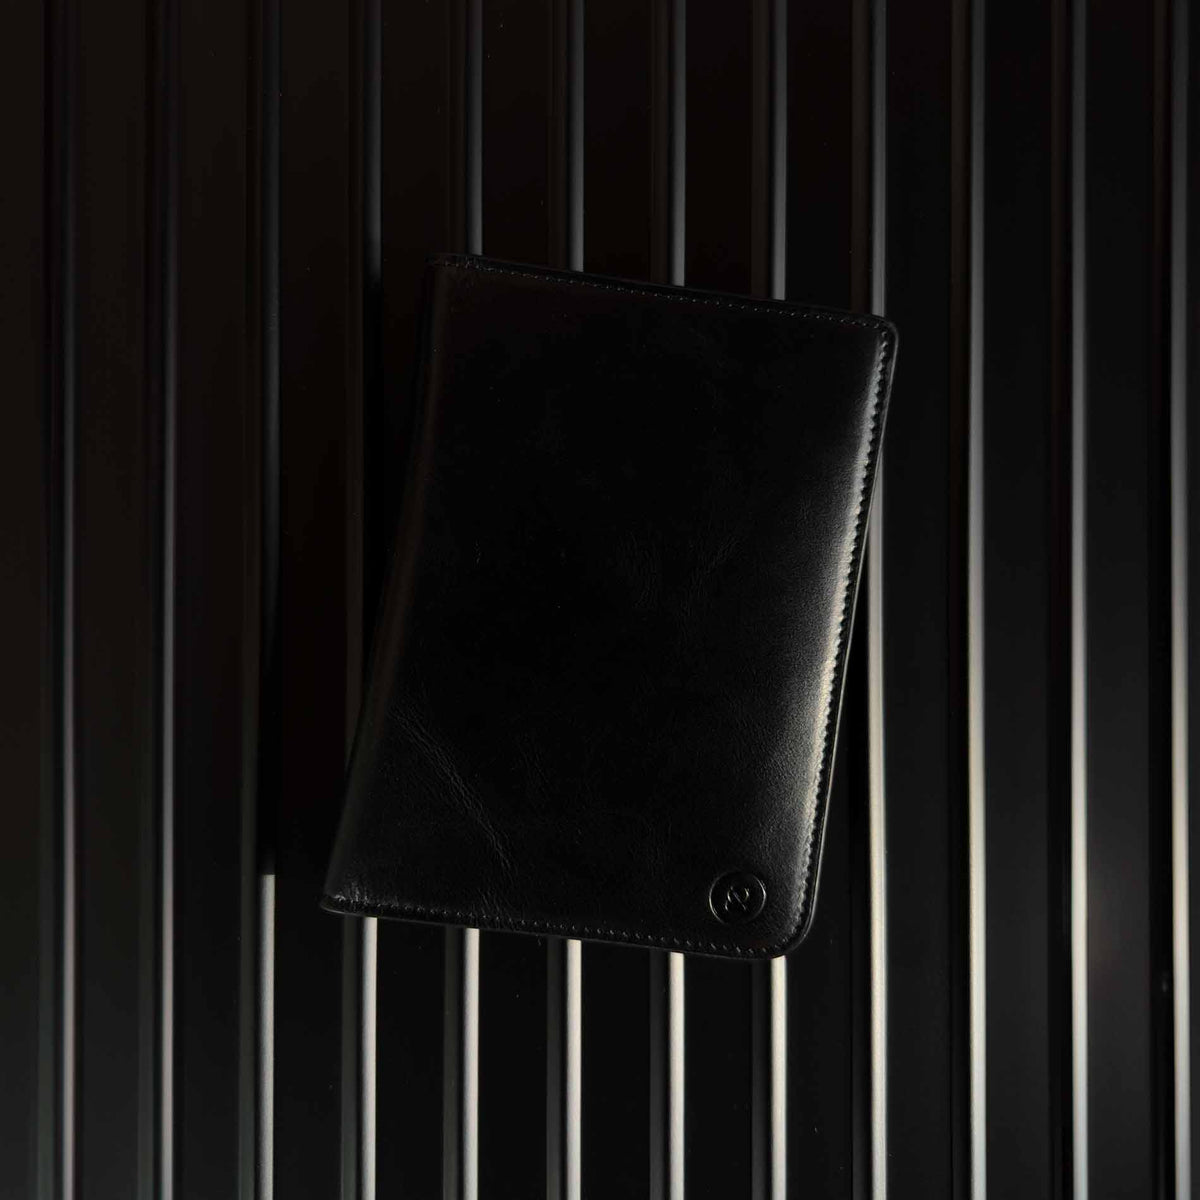 Premium Leather Passport Holder - Travel Essentials - Black